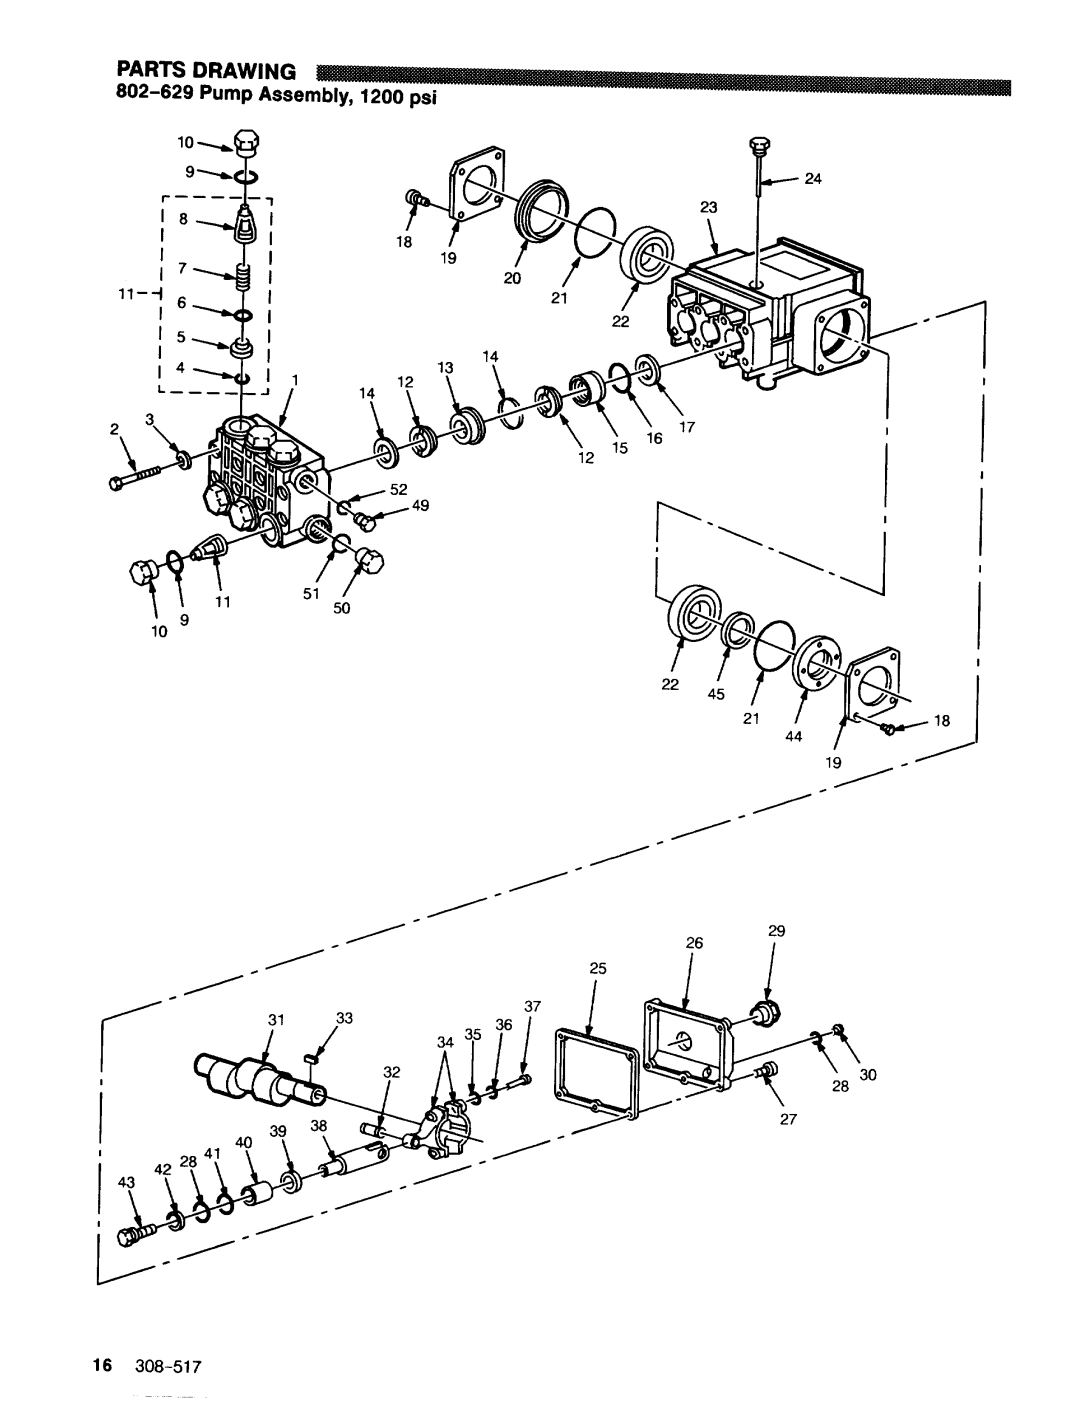 Graco Inc 308-517 manual 802-629Pump Asse, Parts Drawing 